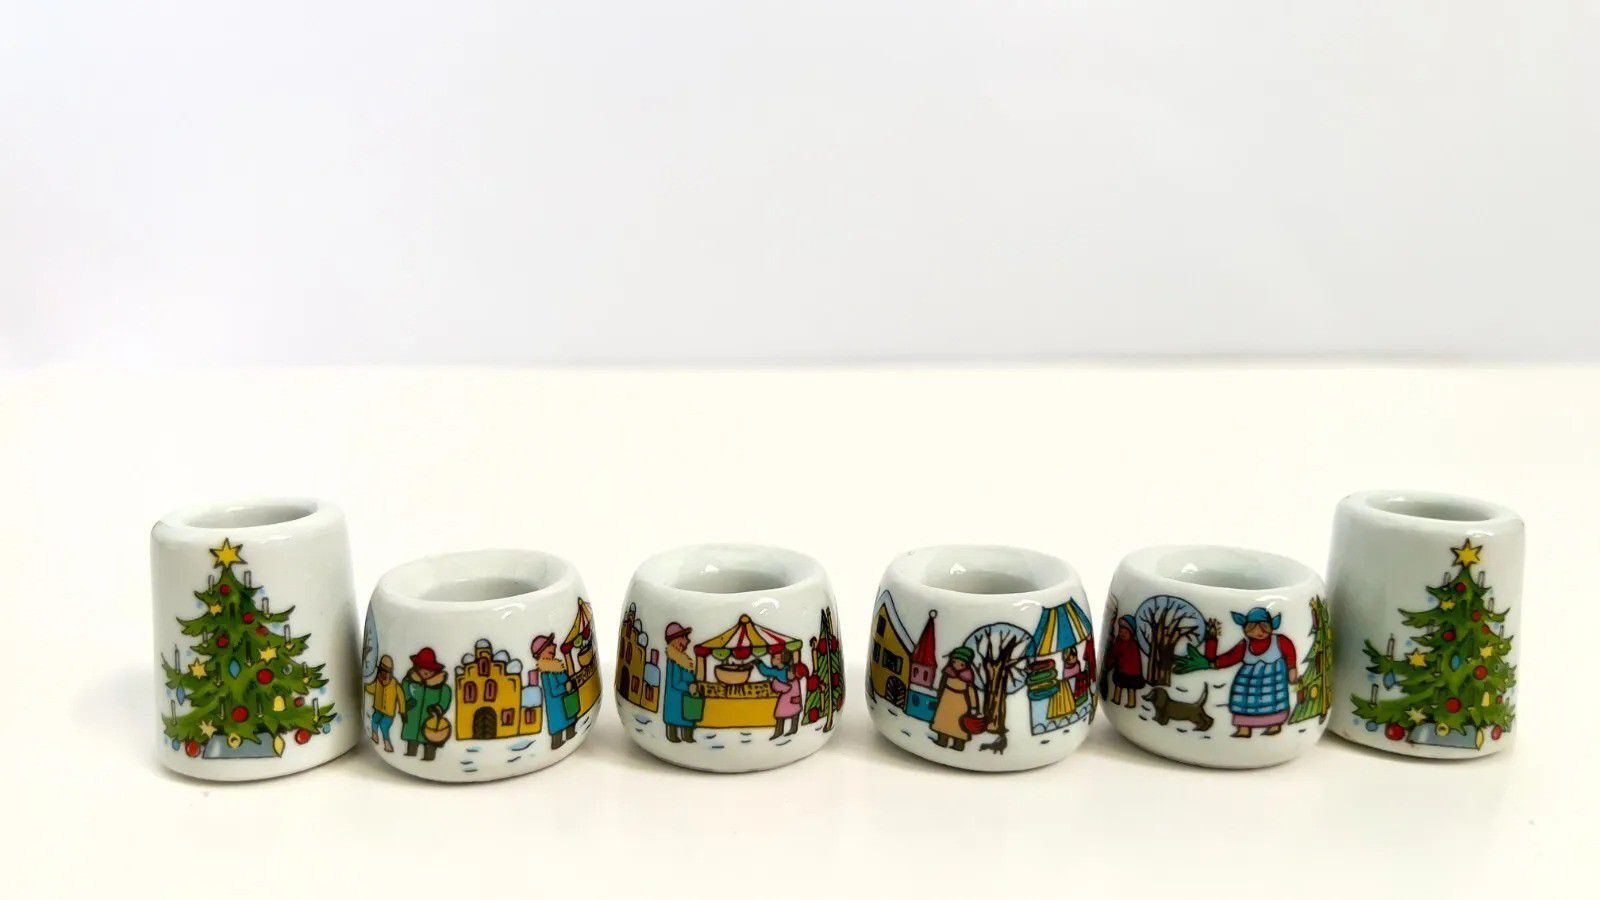 6 Vintage Miniature Mini Porcelain Christmas Tree Candle Holders - Germany